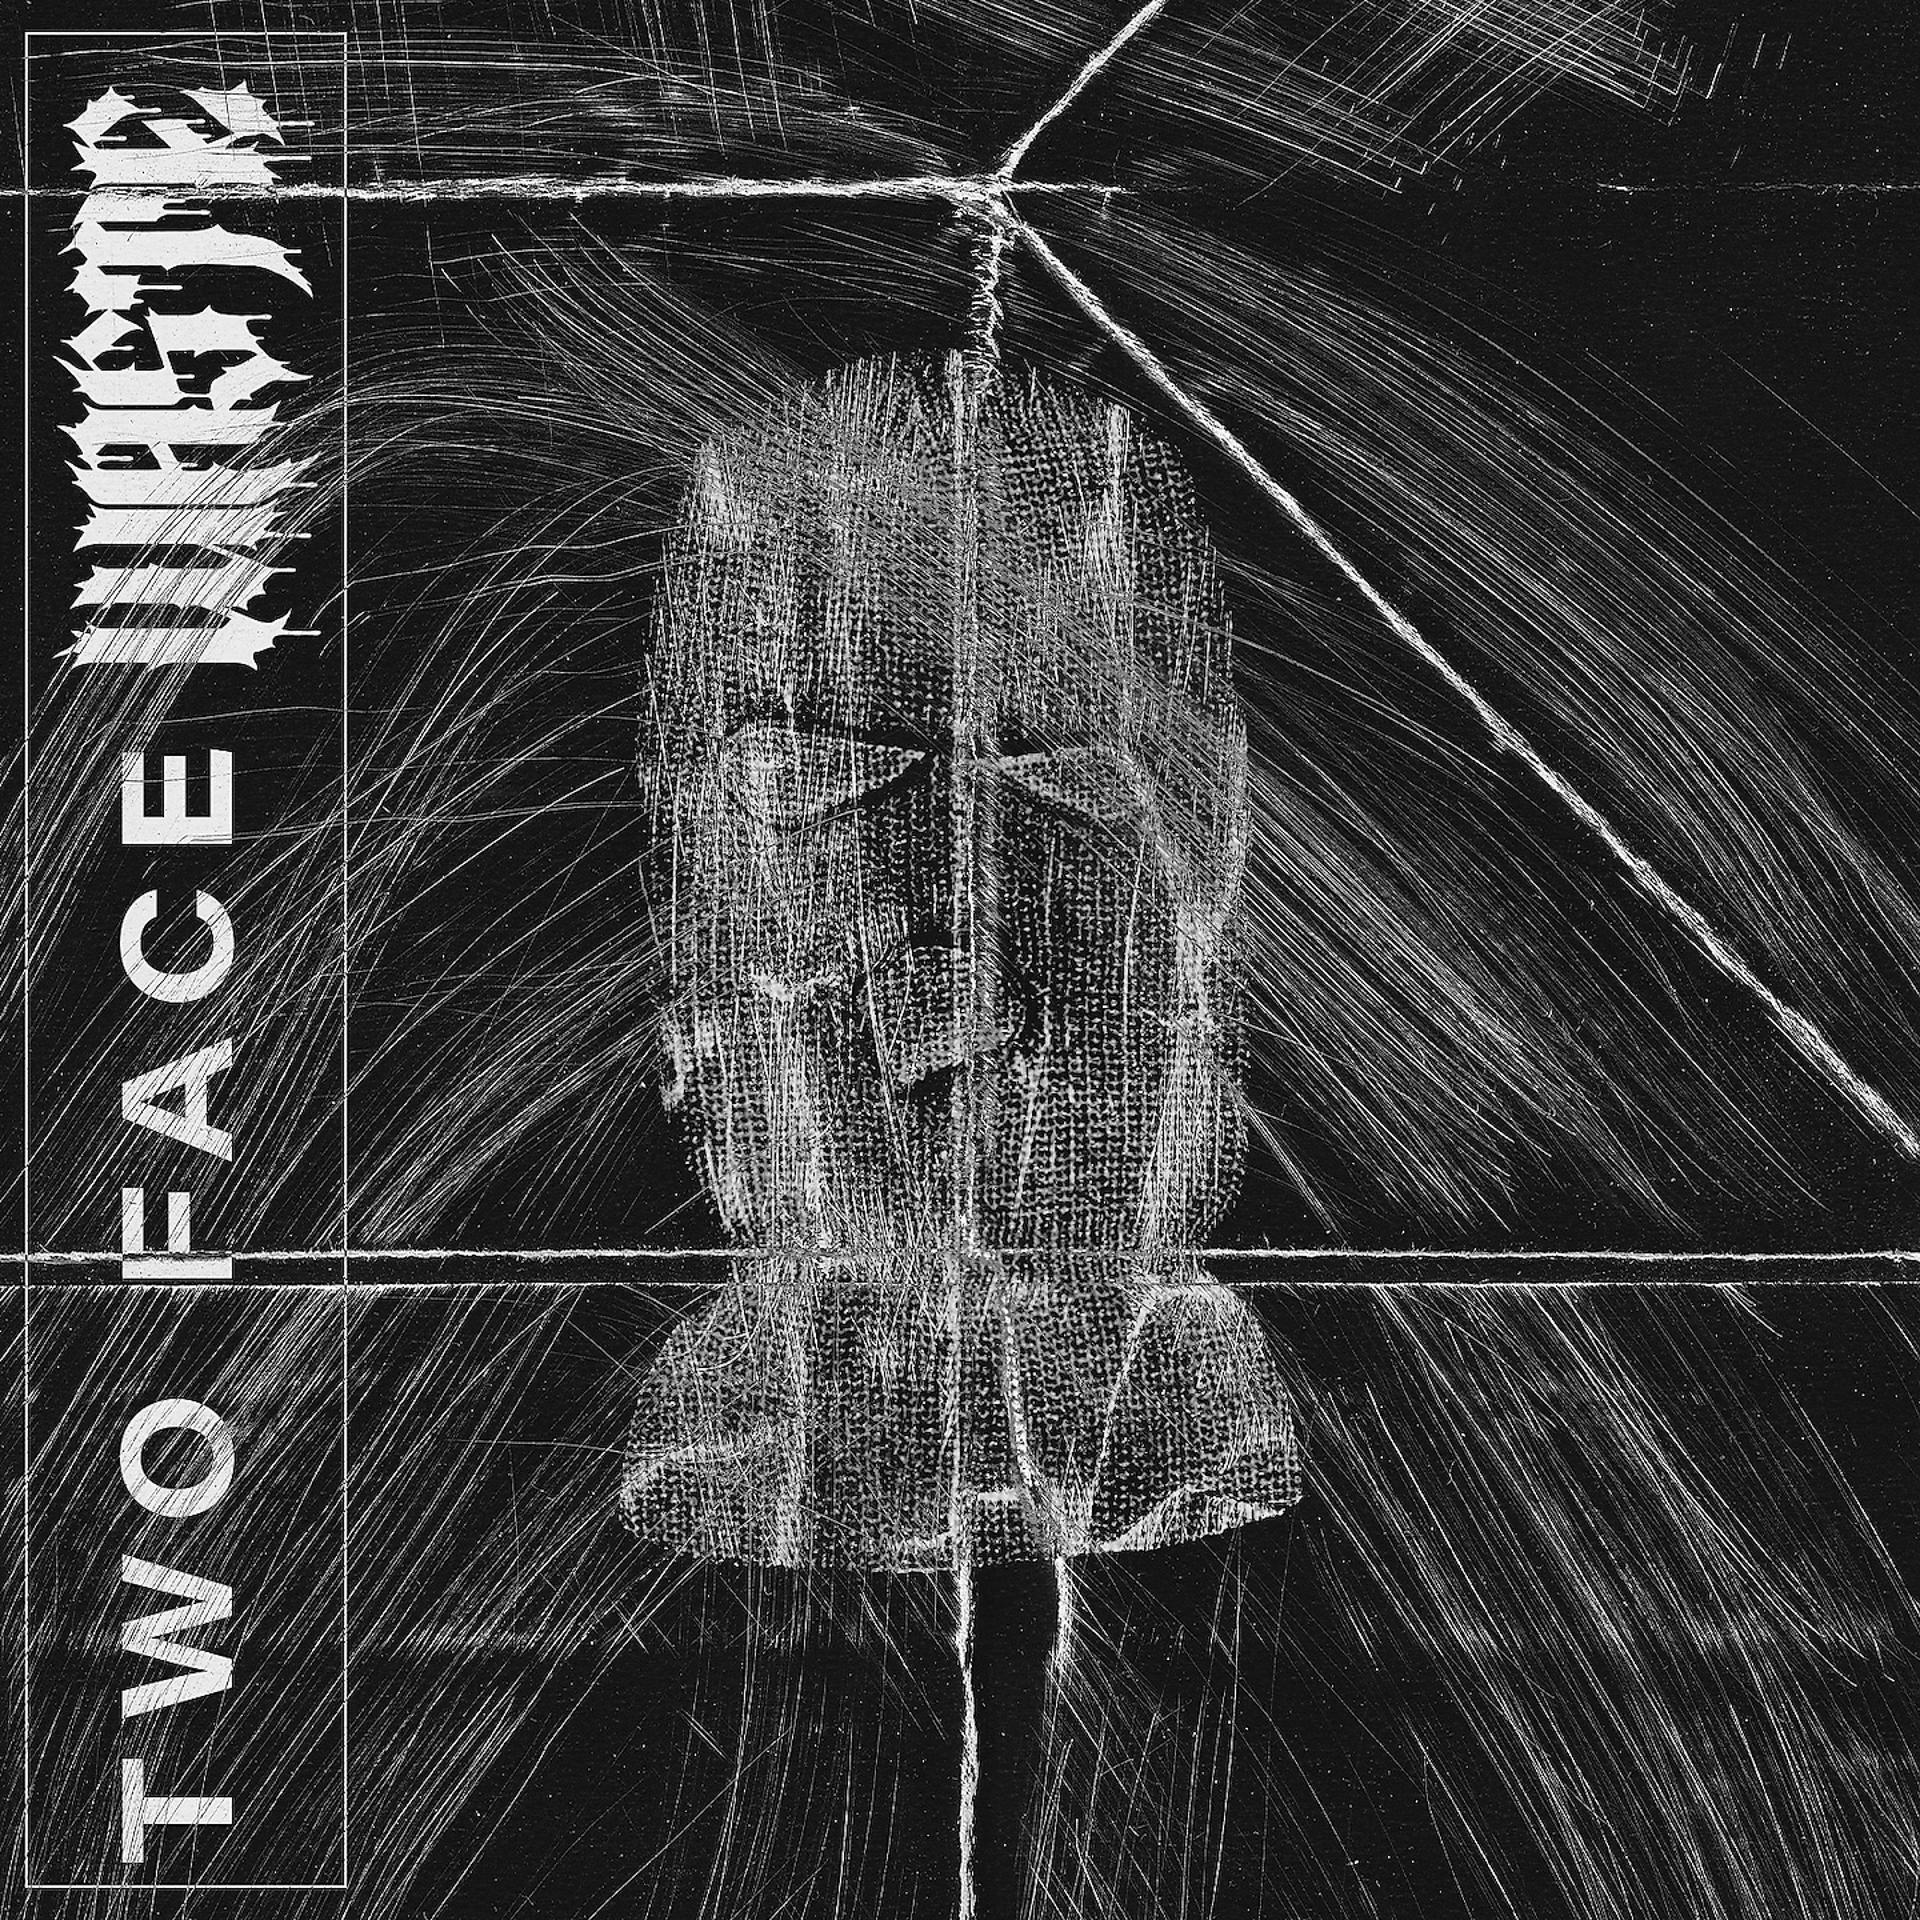 Постер альбома Two Face